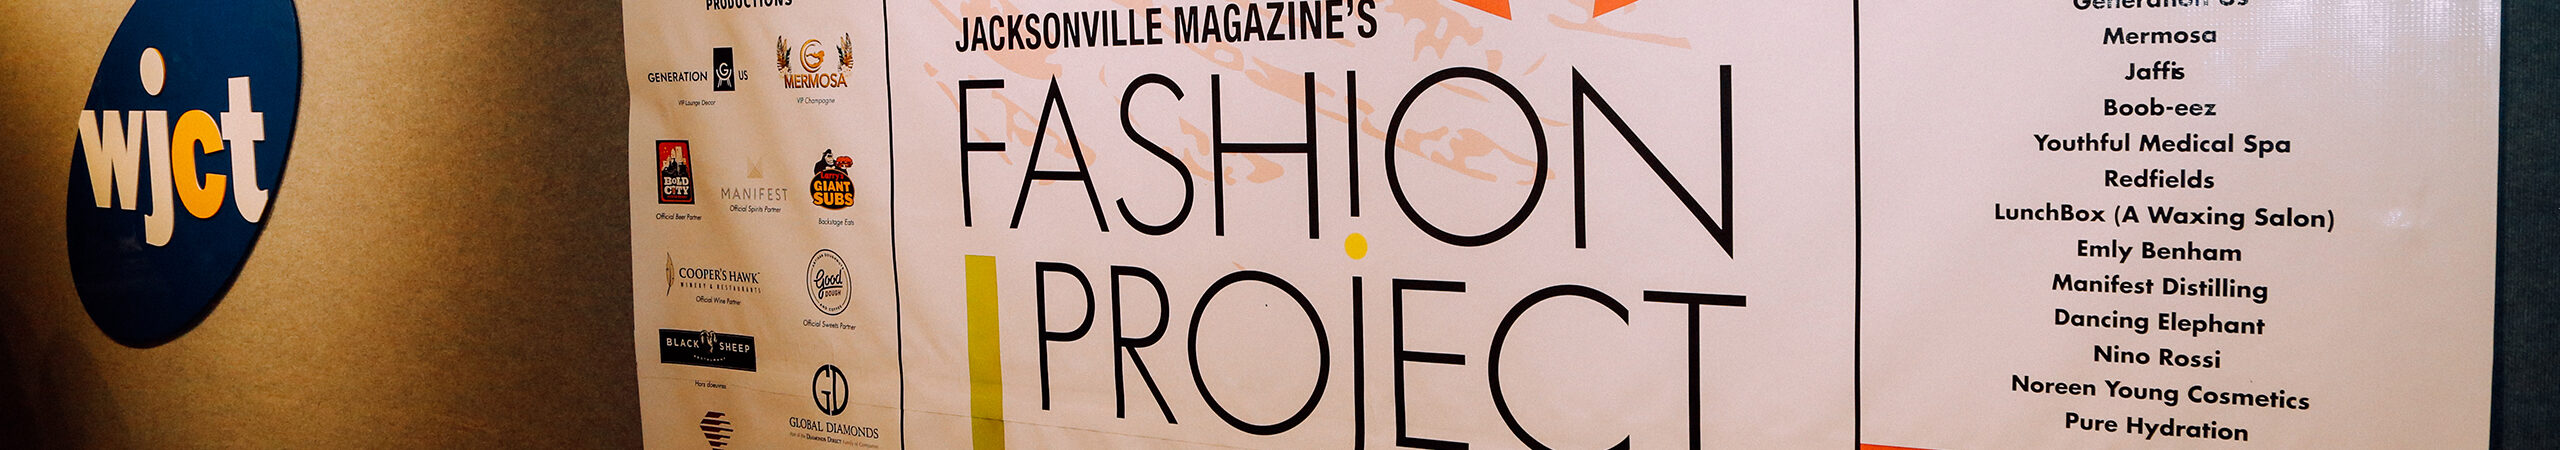 Jacksonville Magazine’s Fashion Project 2018